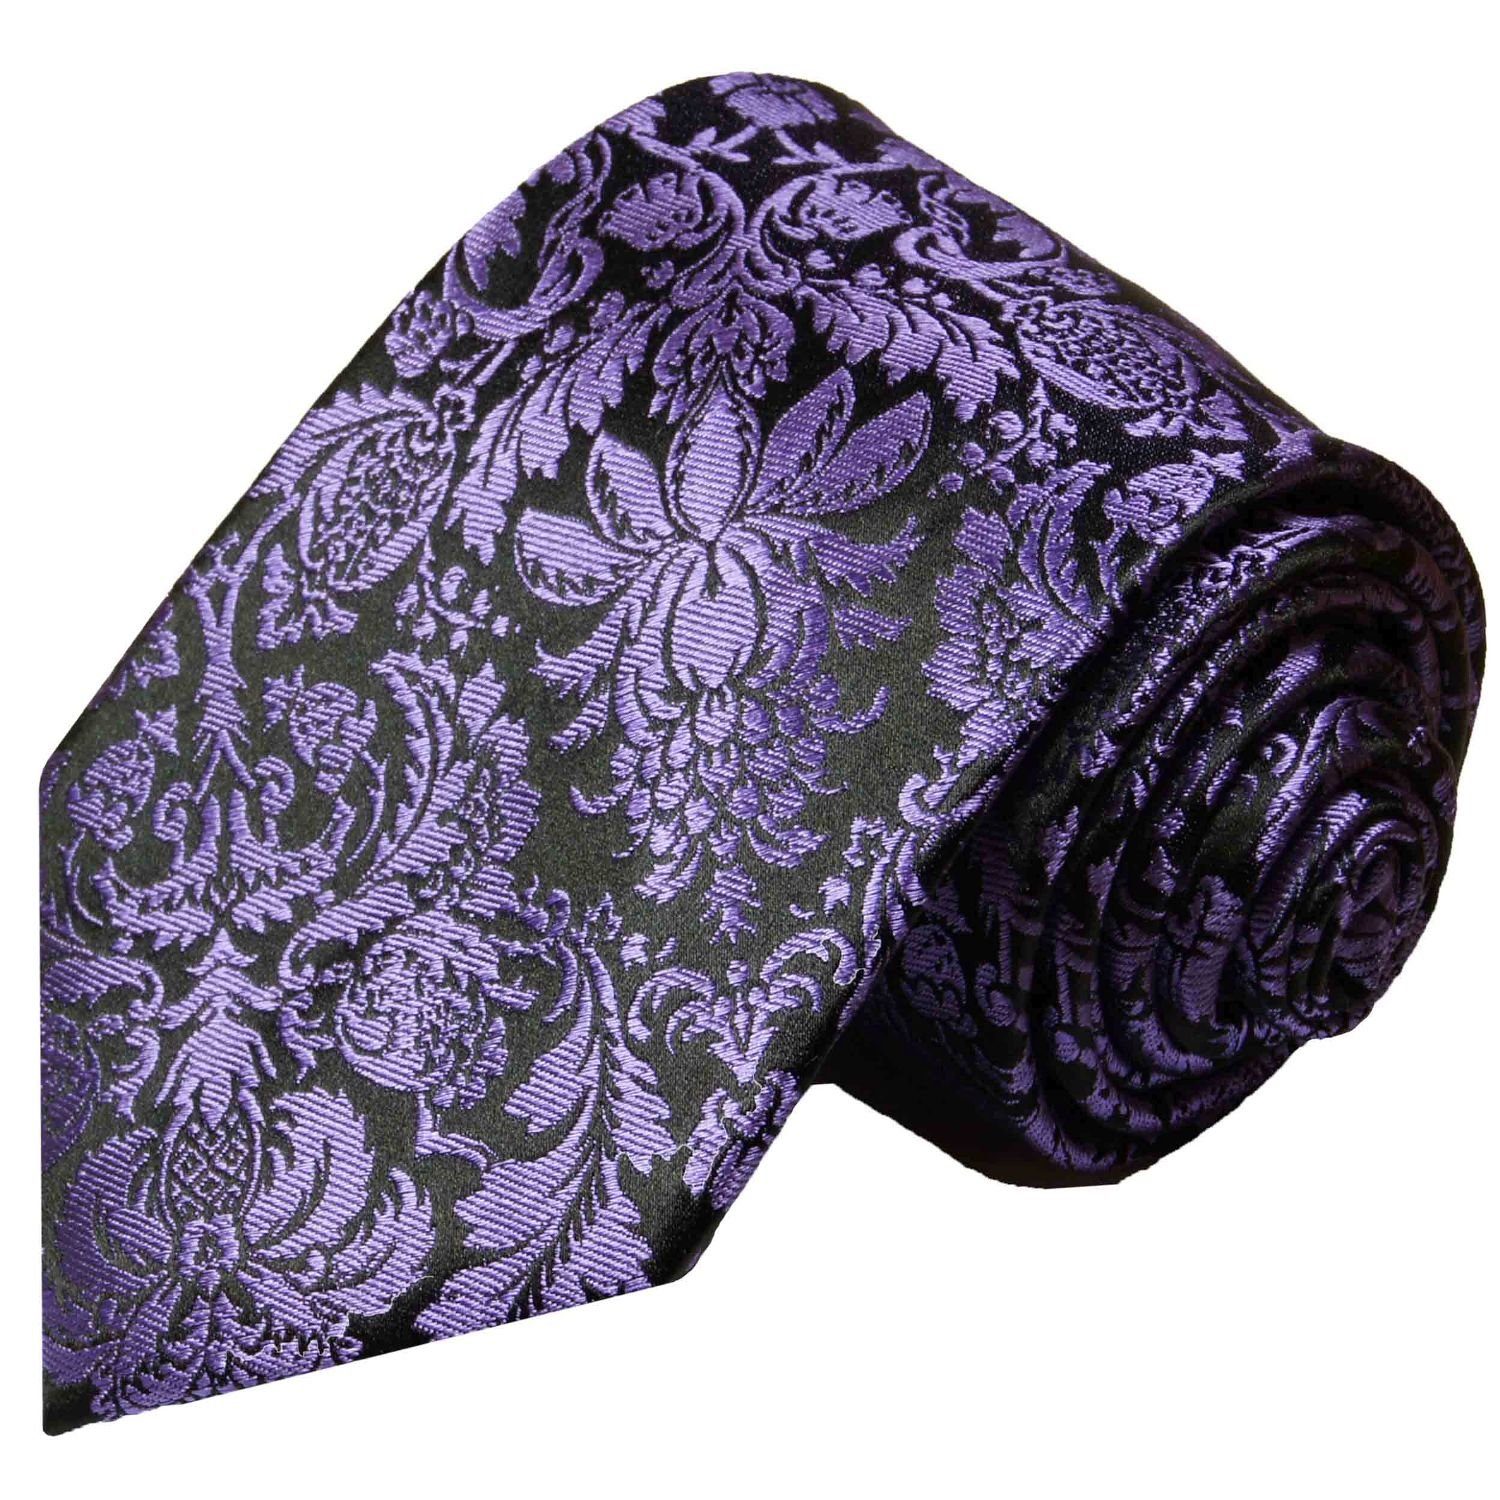 Paul Malone Krawatte Elegante Seidenkrawatte Herren Schlips modern 100% Seide Breit (8cm), lila violett schwarz 353